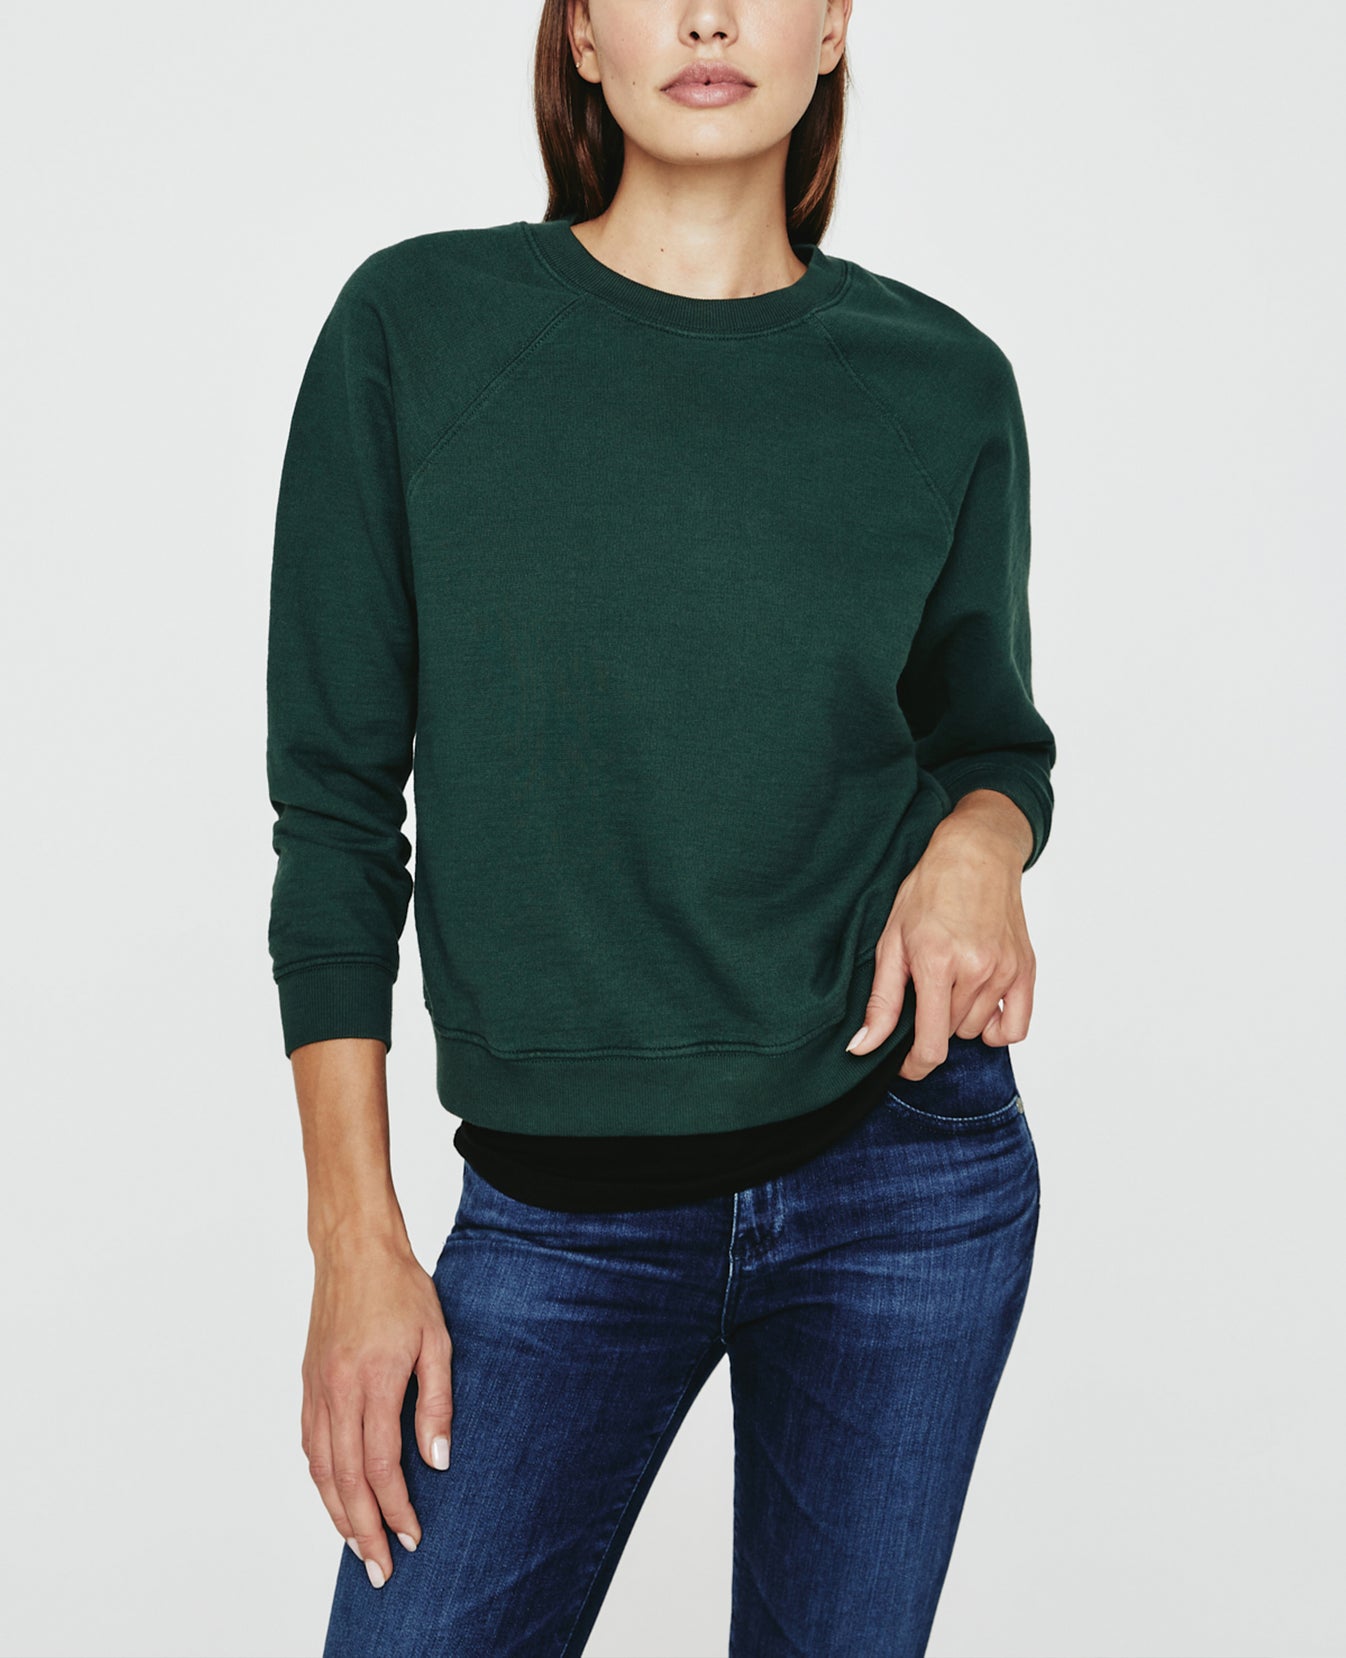 Jadyn Sweatshirt Rich Verdure Vintage Sweatshirt Women Tops Photo 1